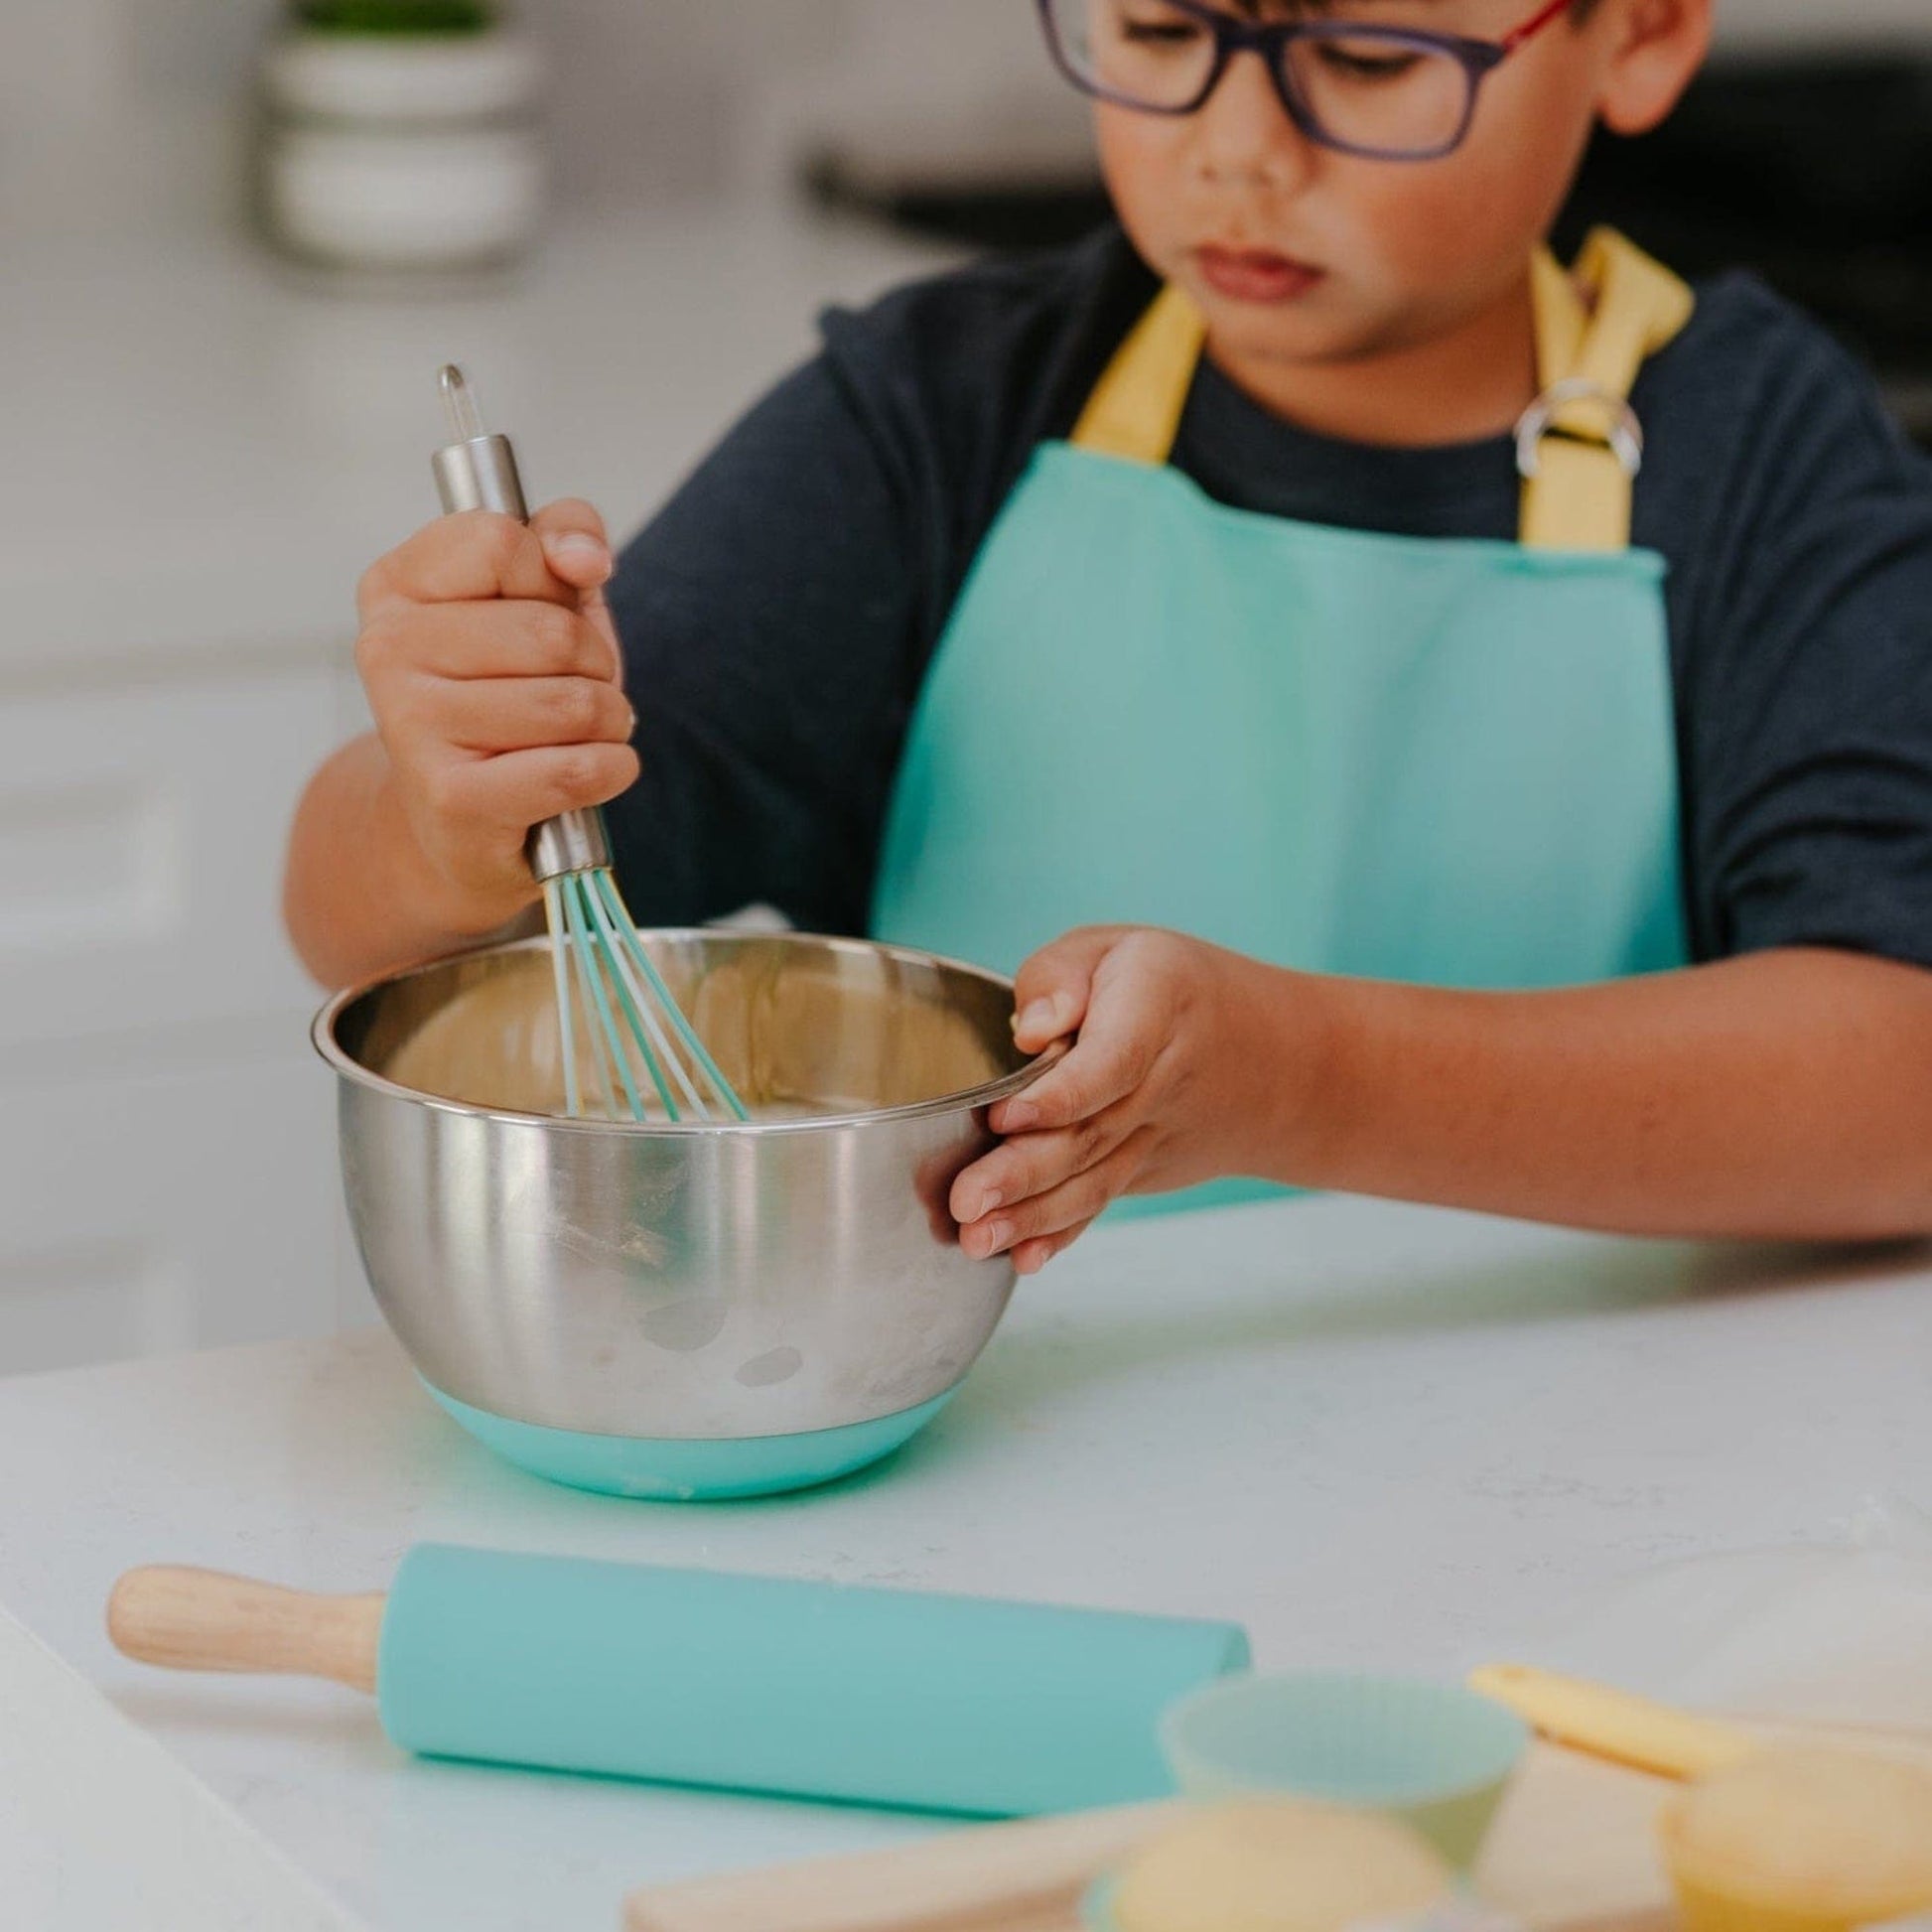 Kids Junior Tiny Real Easy Cooking Kitchen Set and Baking Kit - 22 Pc. Mini  Stove Burner